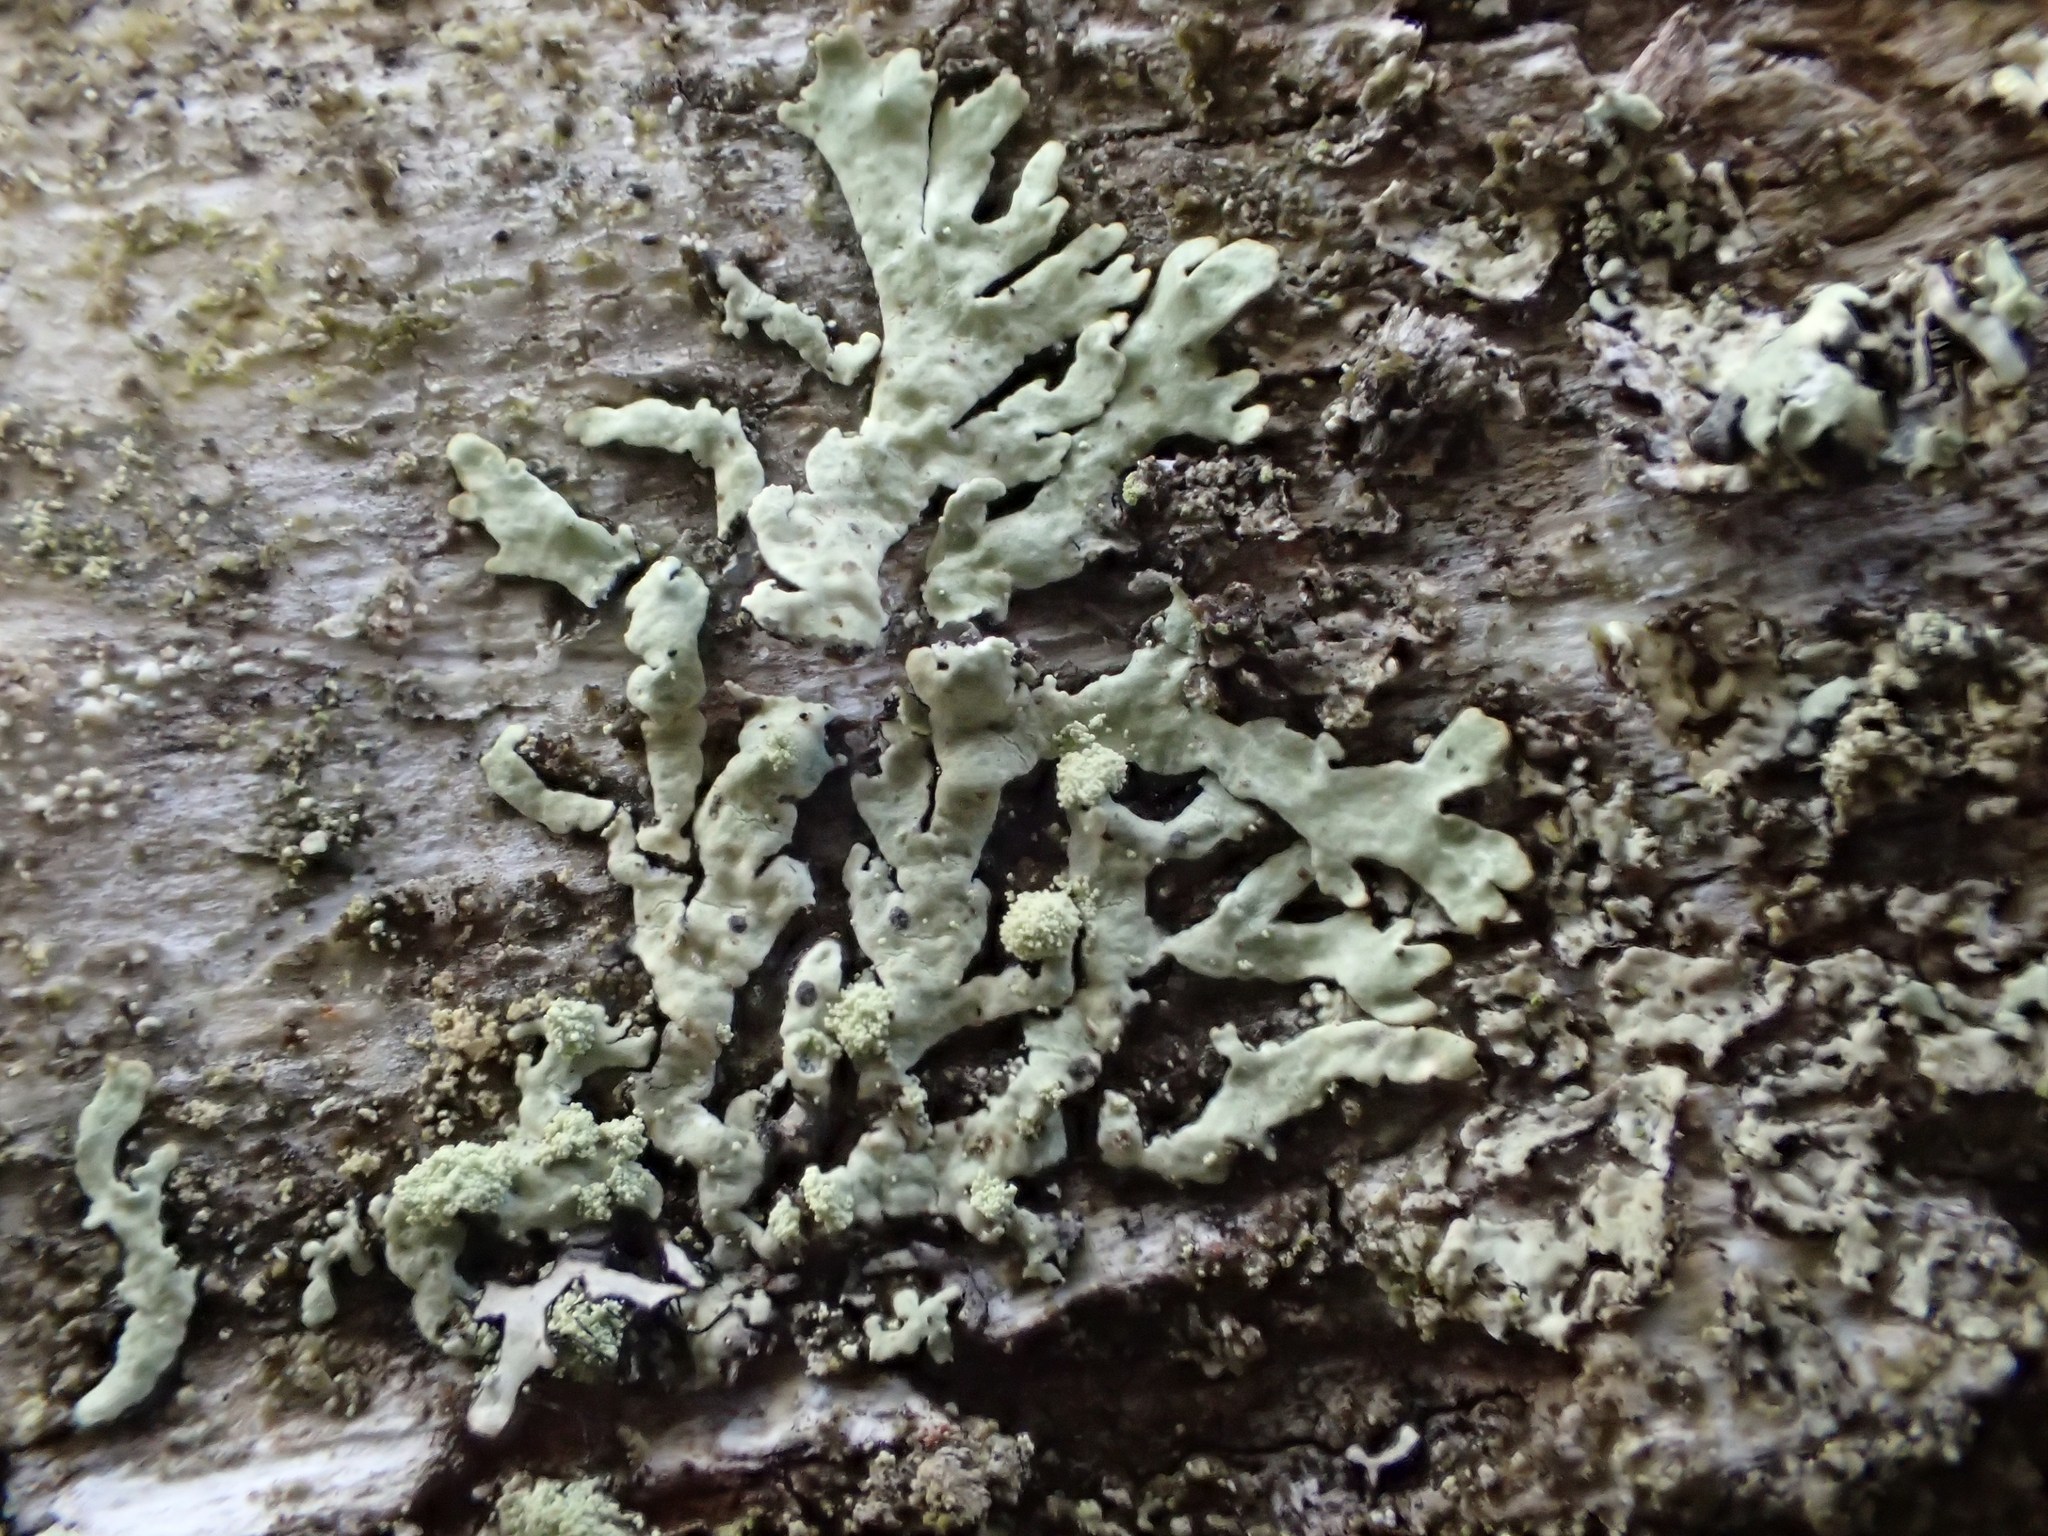 Parmeliopsis ambigua on a birch